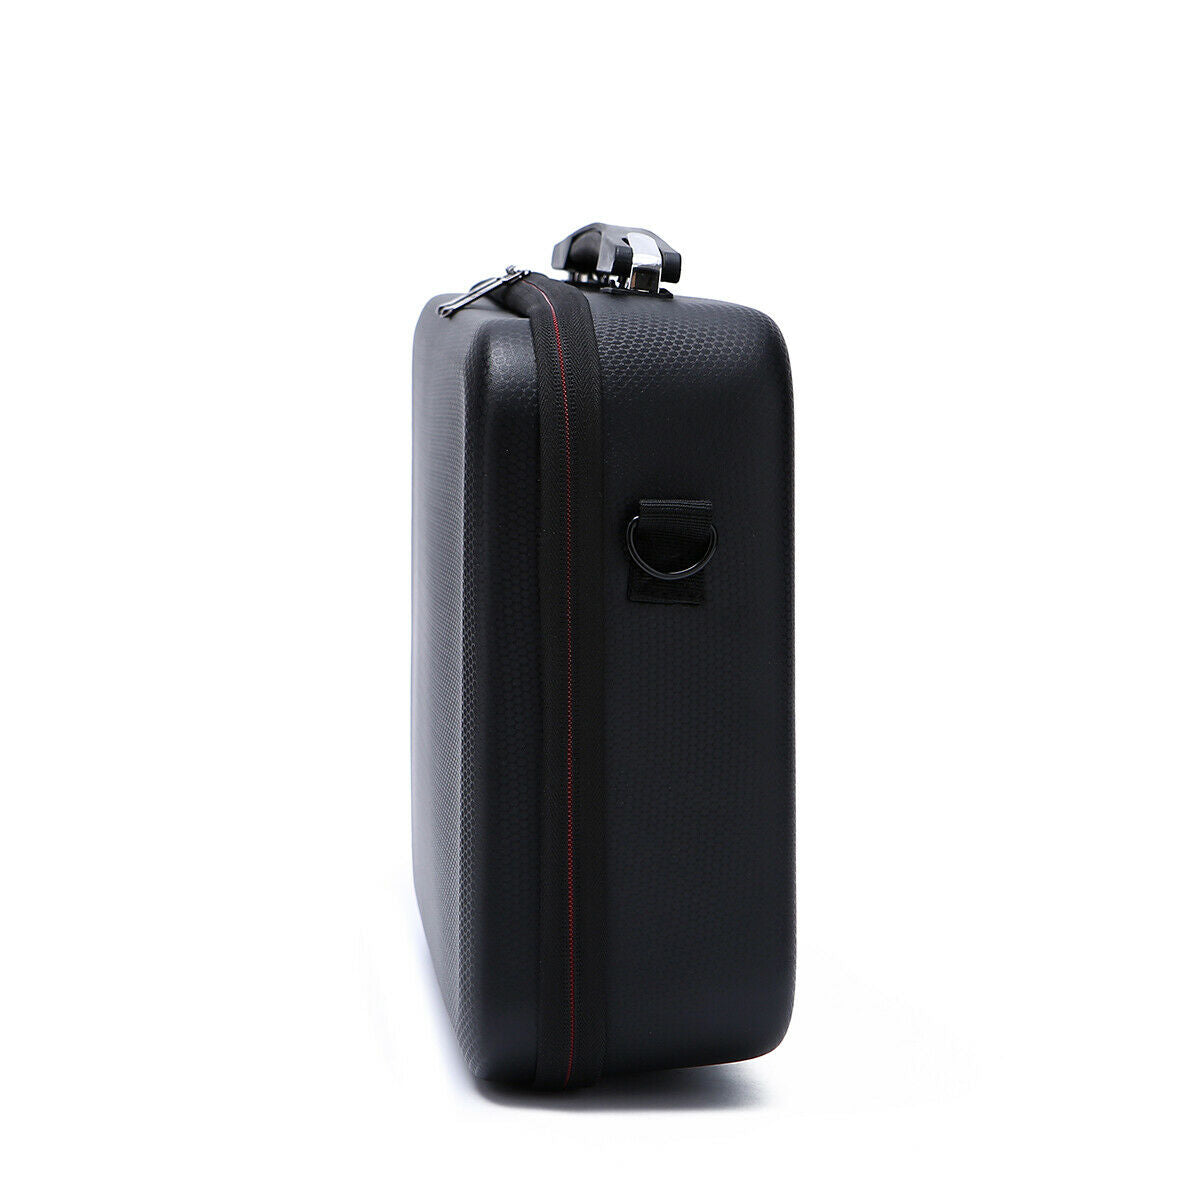 Portable Shoulder Bag Carrying Case for Zhiyun Weebill 2 Stabilizer Storage Box